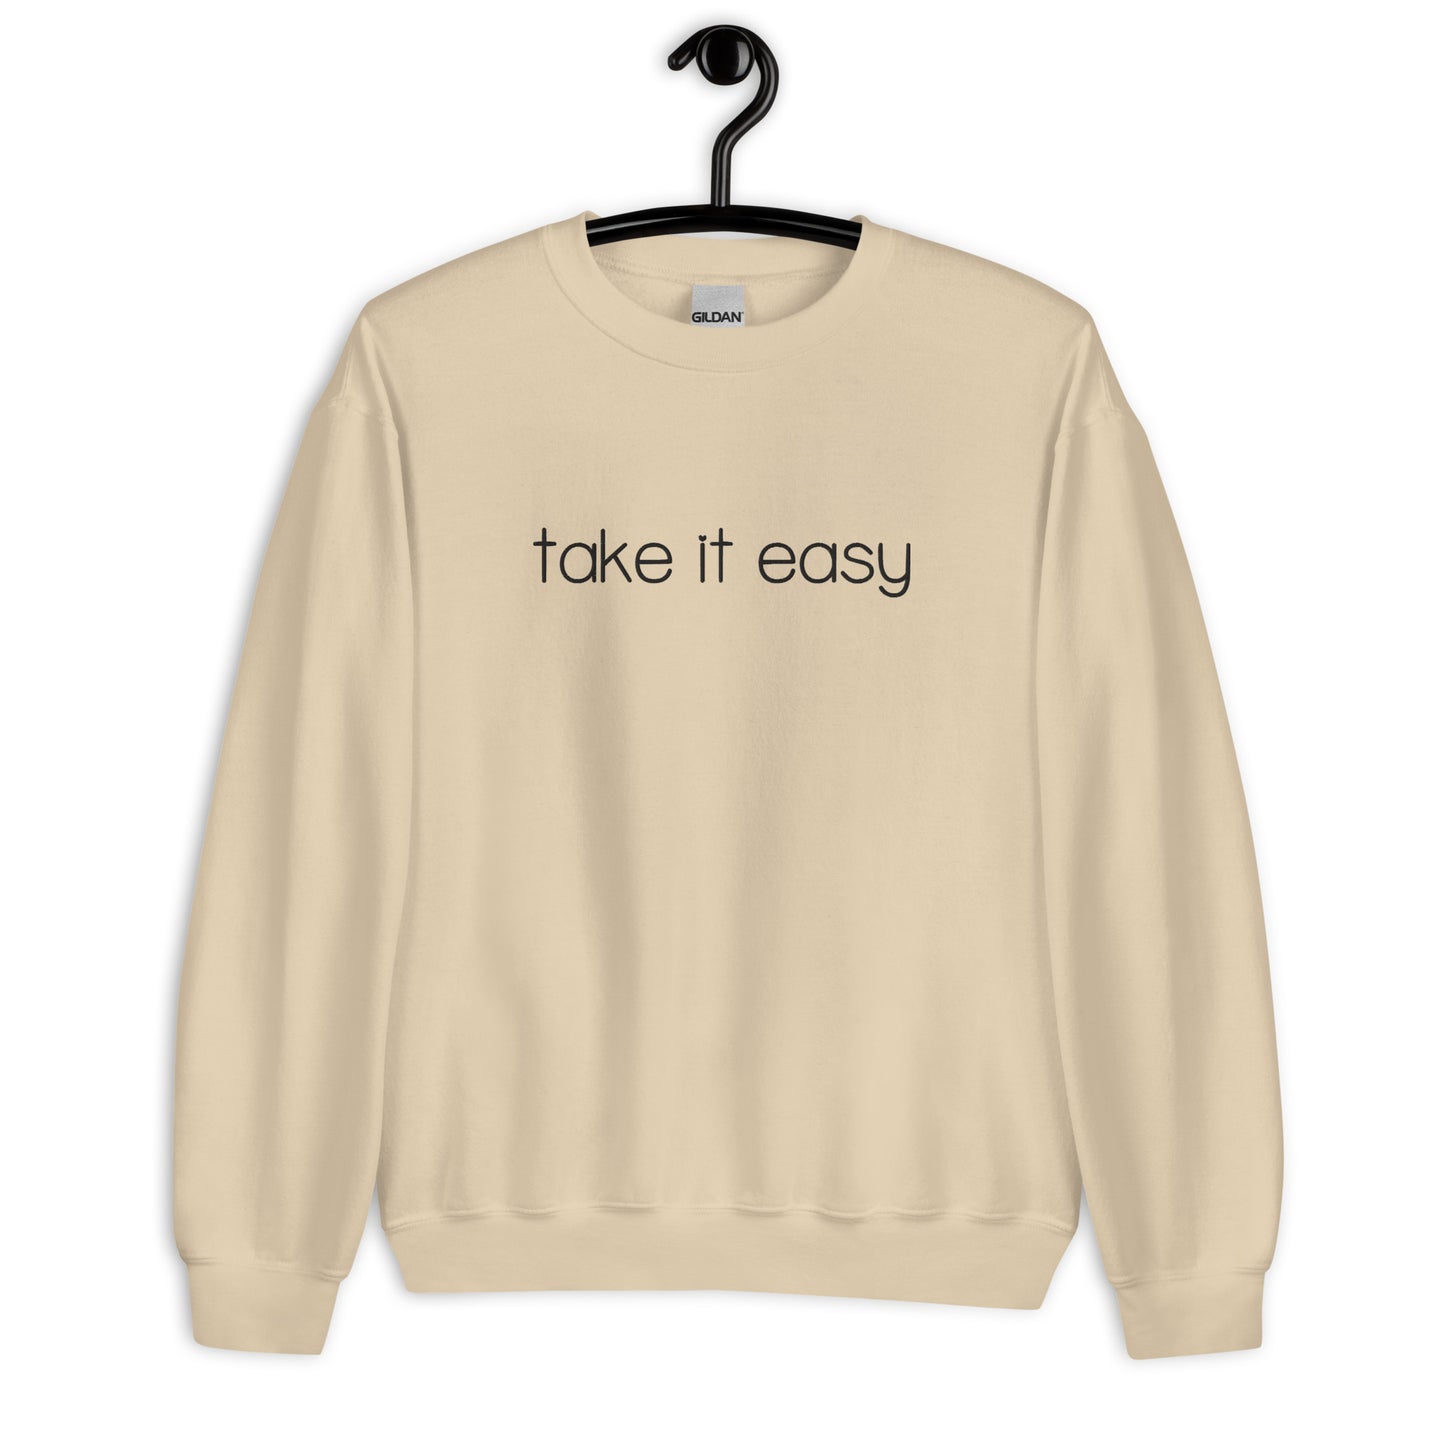 Take It Easy Embroidered Sweatshirt